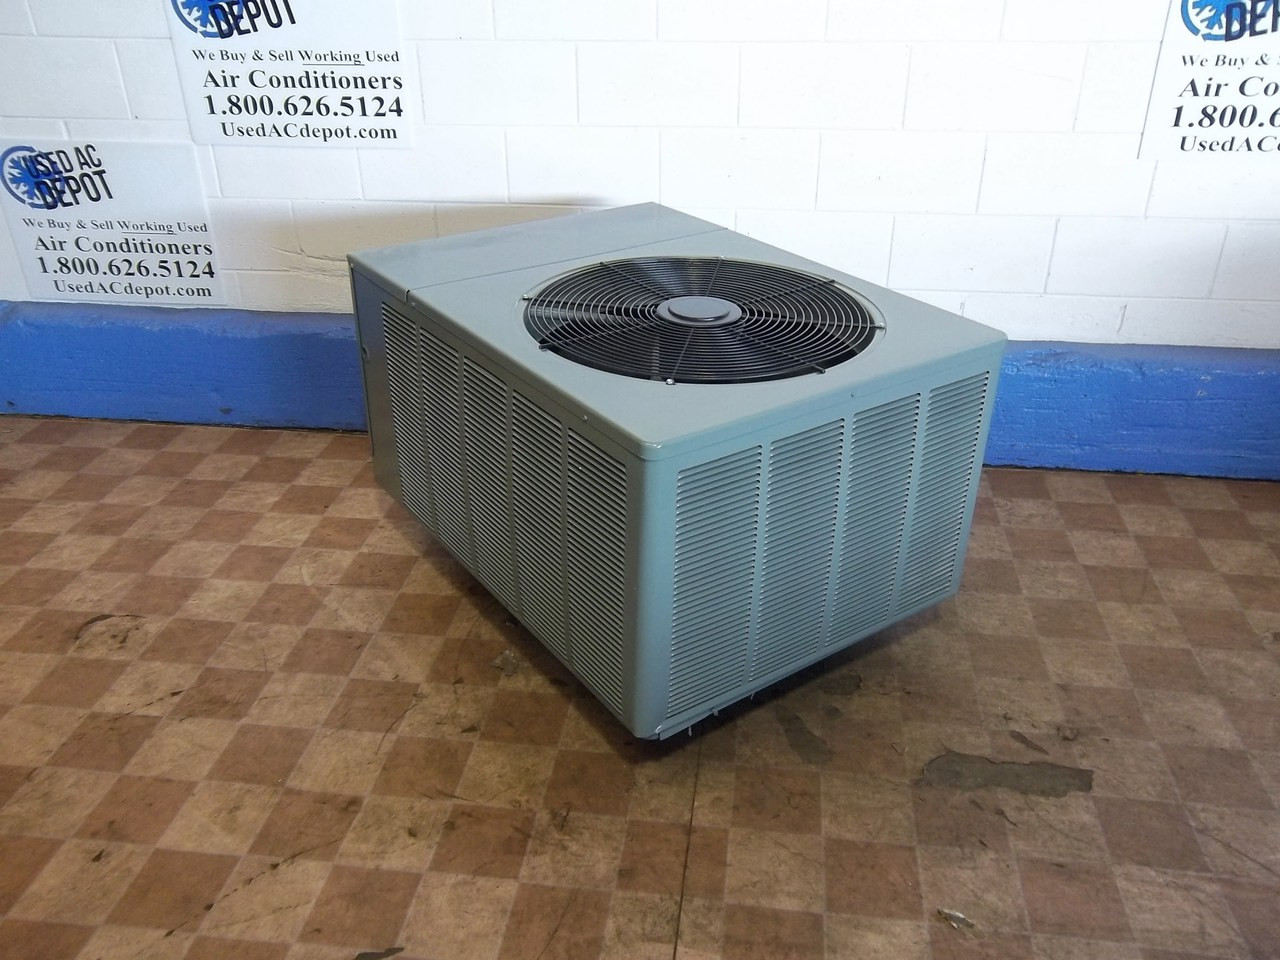 Used AC Depot Refurbished, Certified Condenser RHEEM RAKB-048JAZ 2P Rheem Air Conditioner Model Raka 048jaz